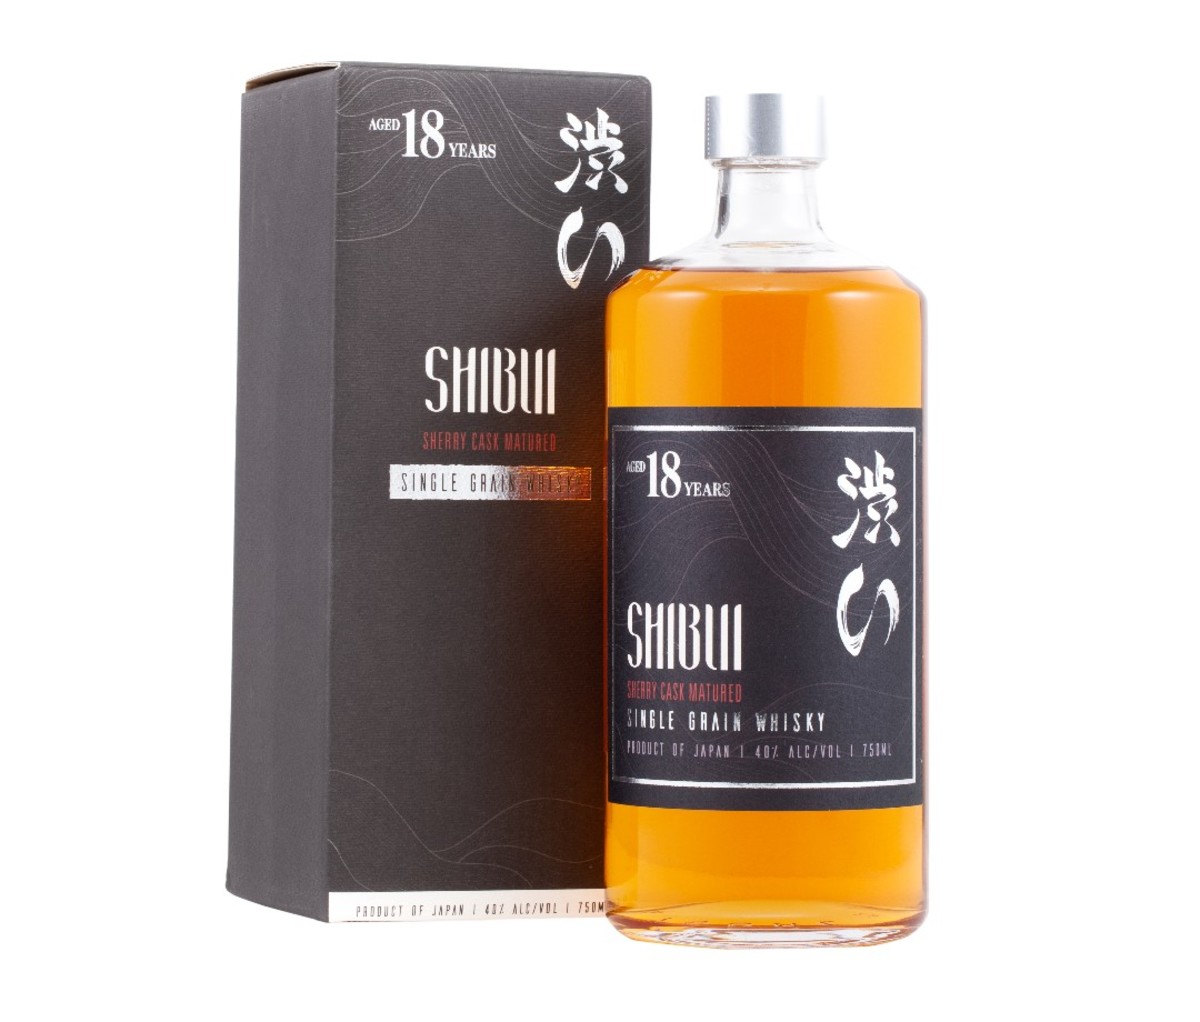 Bottle of Shibui 18-Year-Old Sherry Cask Single Grain Japanese whisky